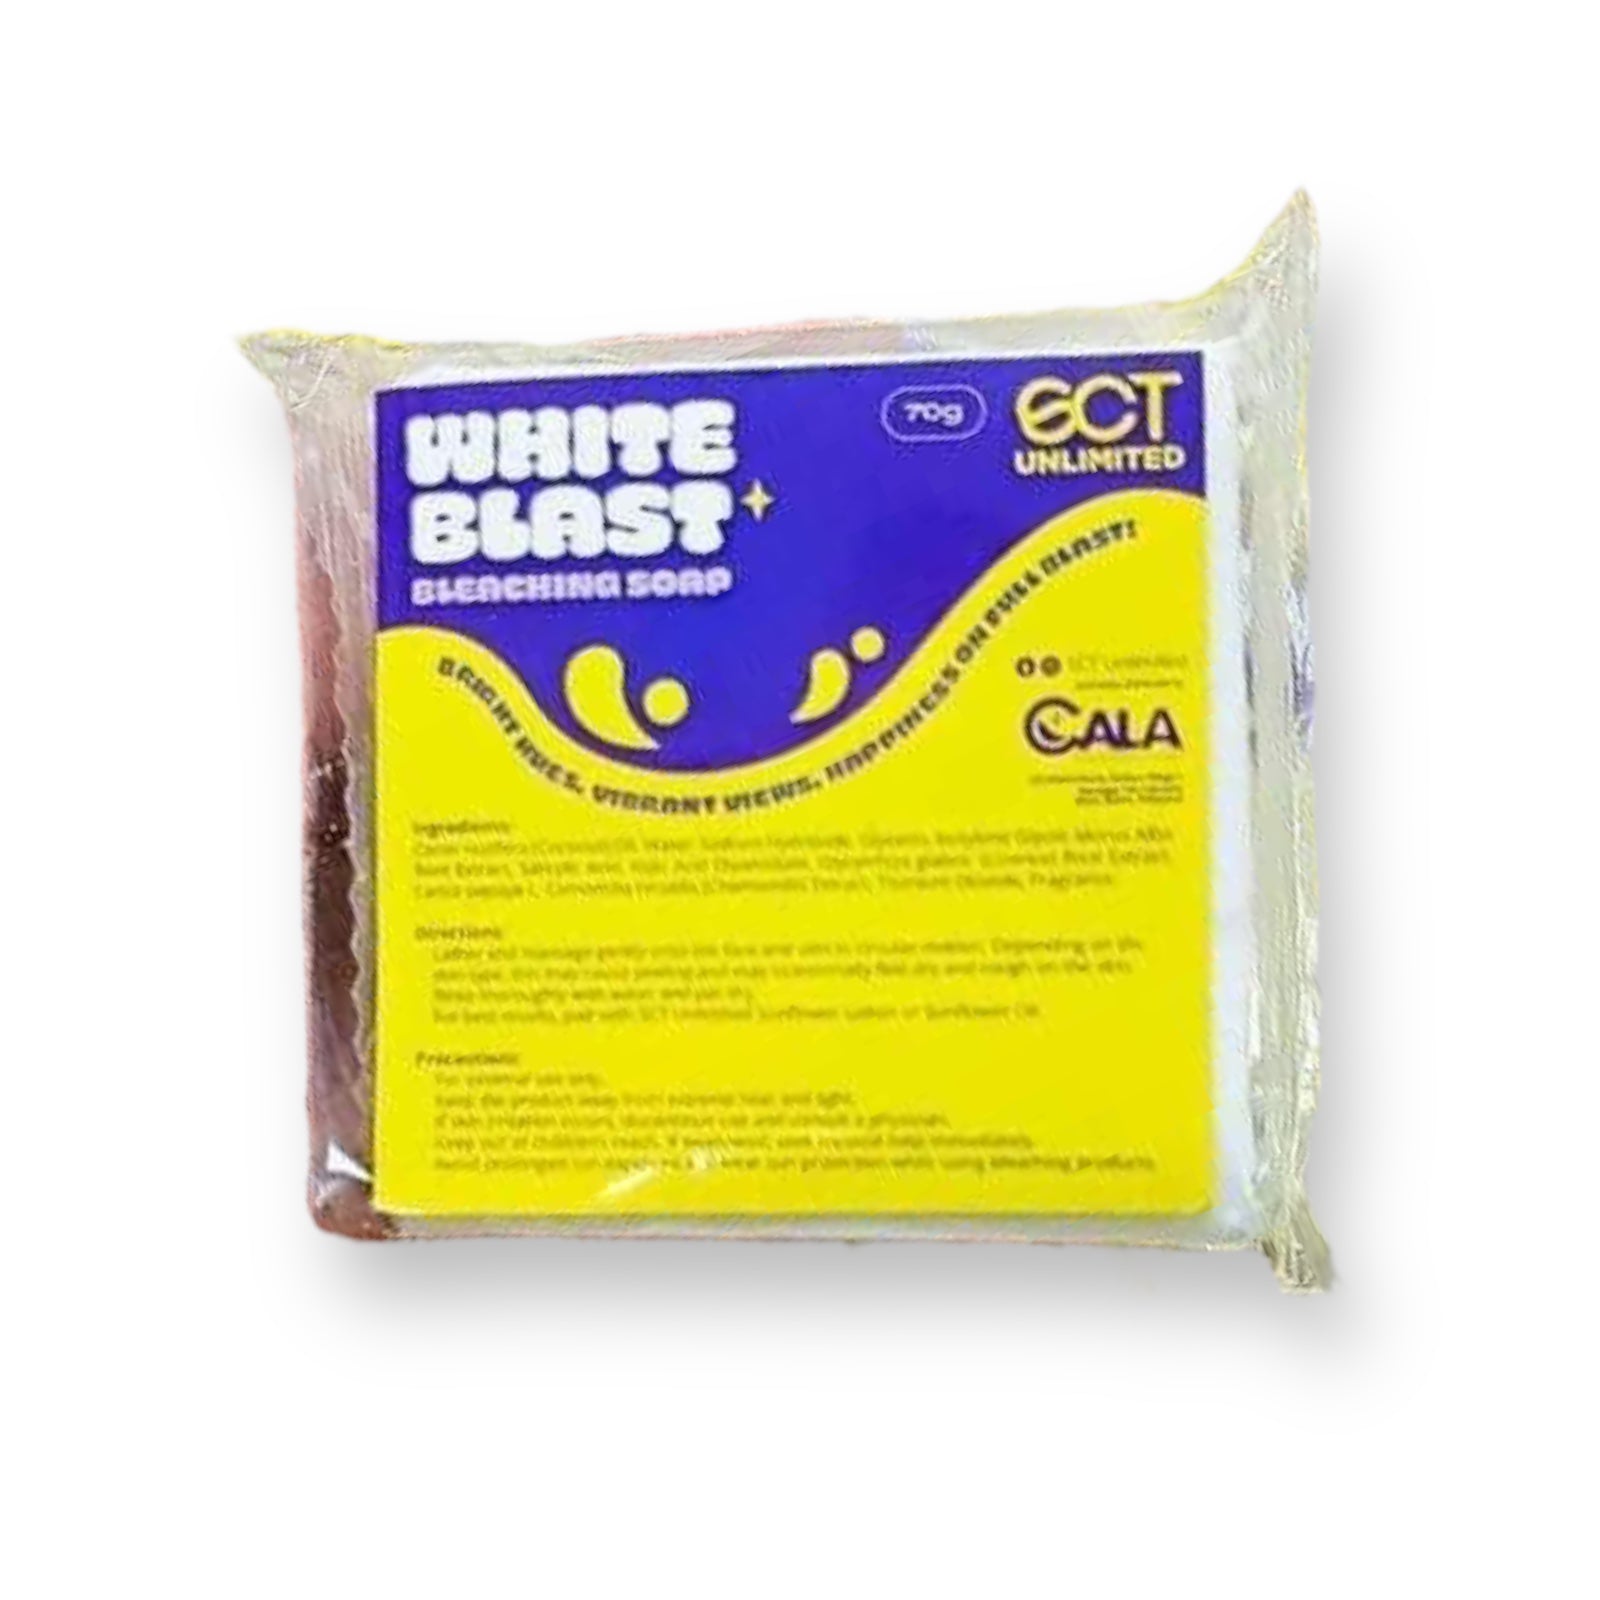 SCT Unlimited - White Blast Bleaching Soap 70g